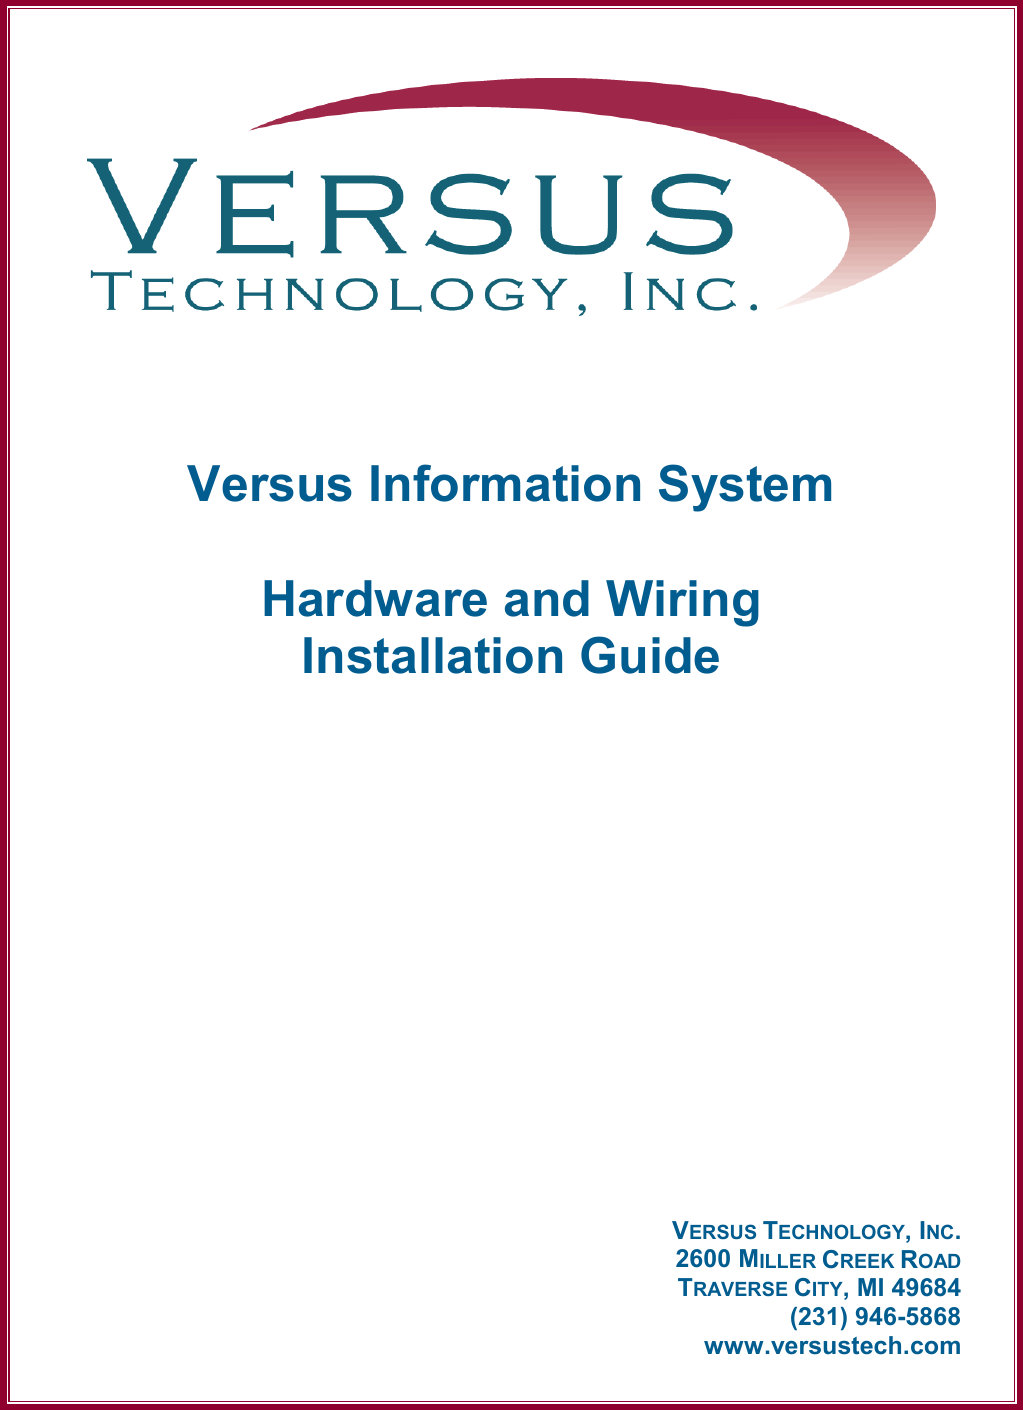         Versus Information System  Hardware and Wiring Installation Guide                  VERSUS TECHNOLOGY, INC. 2600 MILLER CREEK ROAD TRAVERSE CITY, MI 49684 (231) 946-5868 www.versustech.com